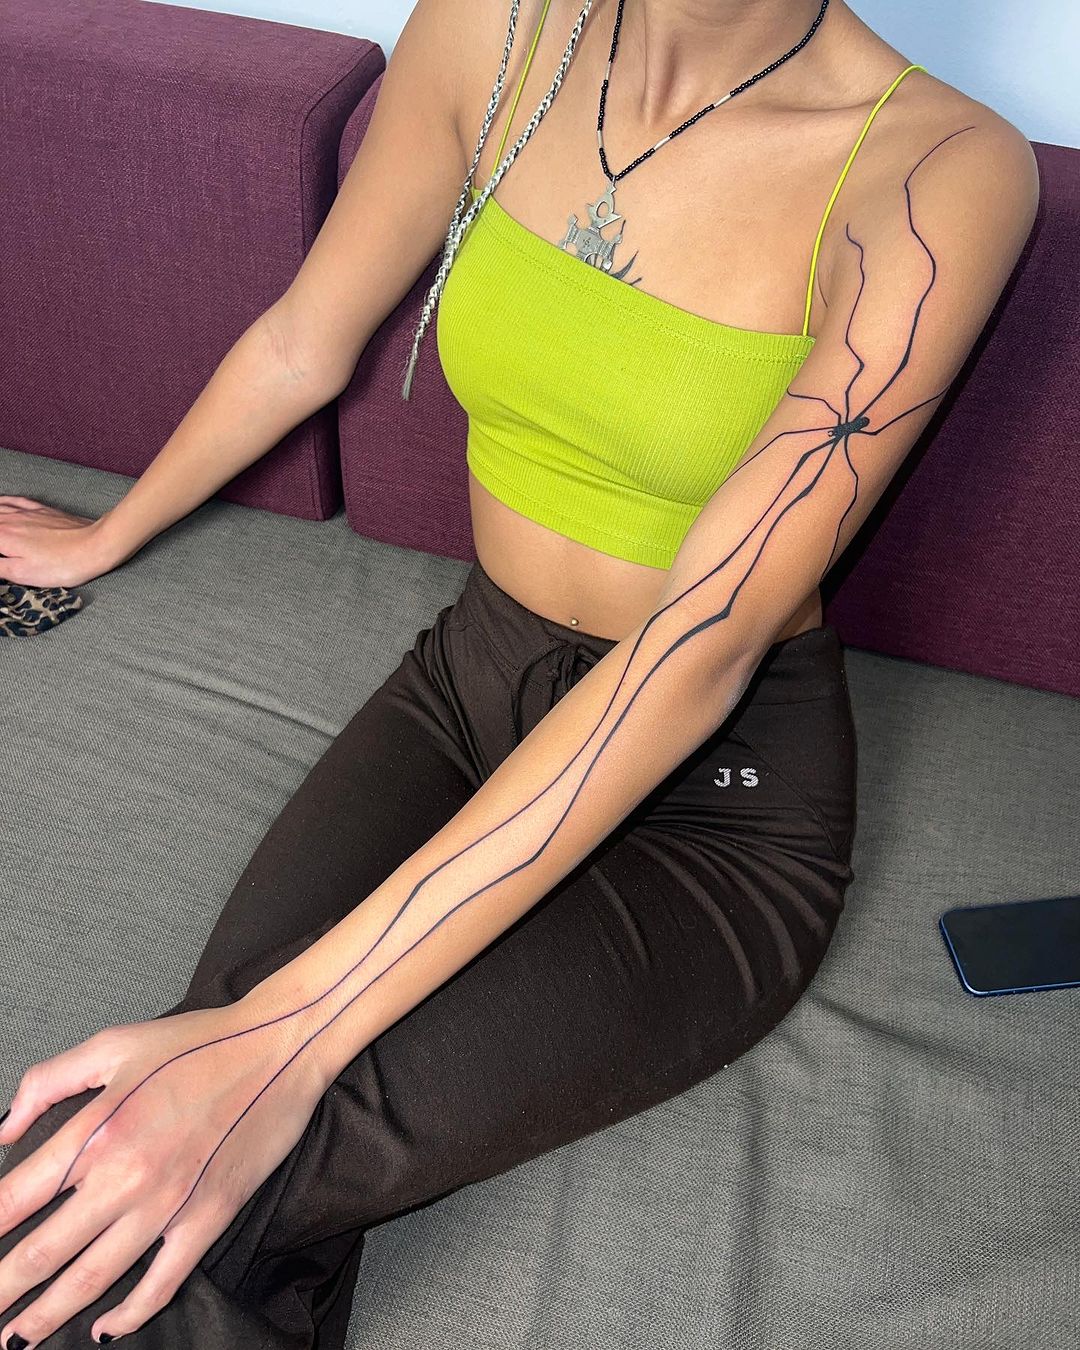 girl abstract sleeve tattoo by tattoo artist nakkab